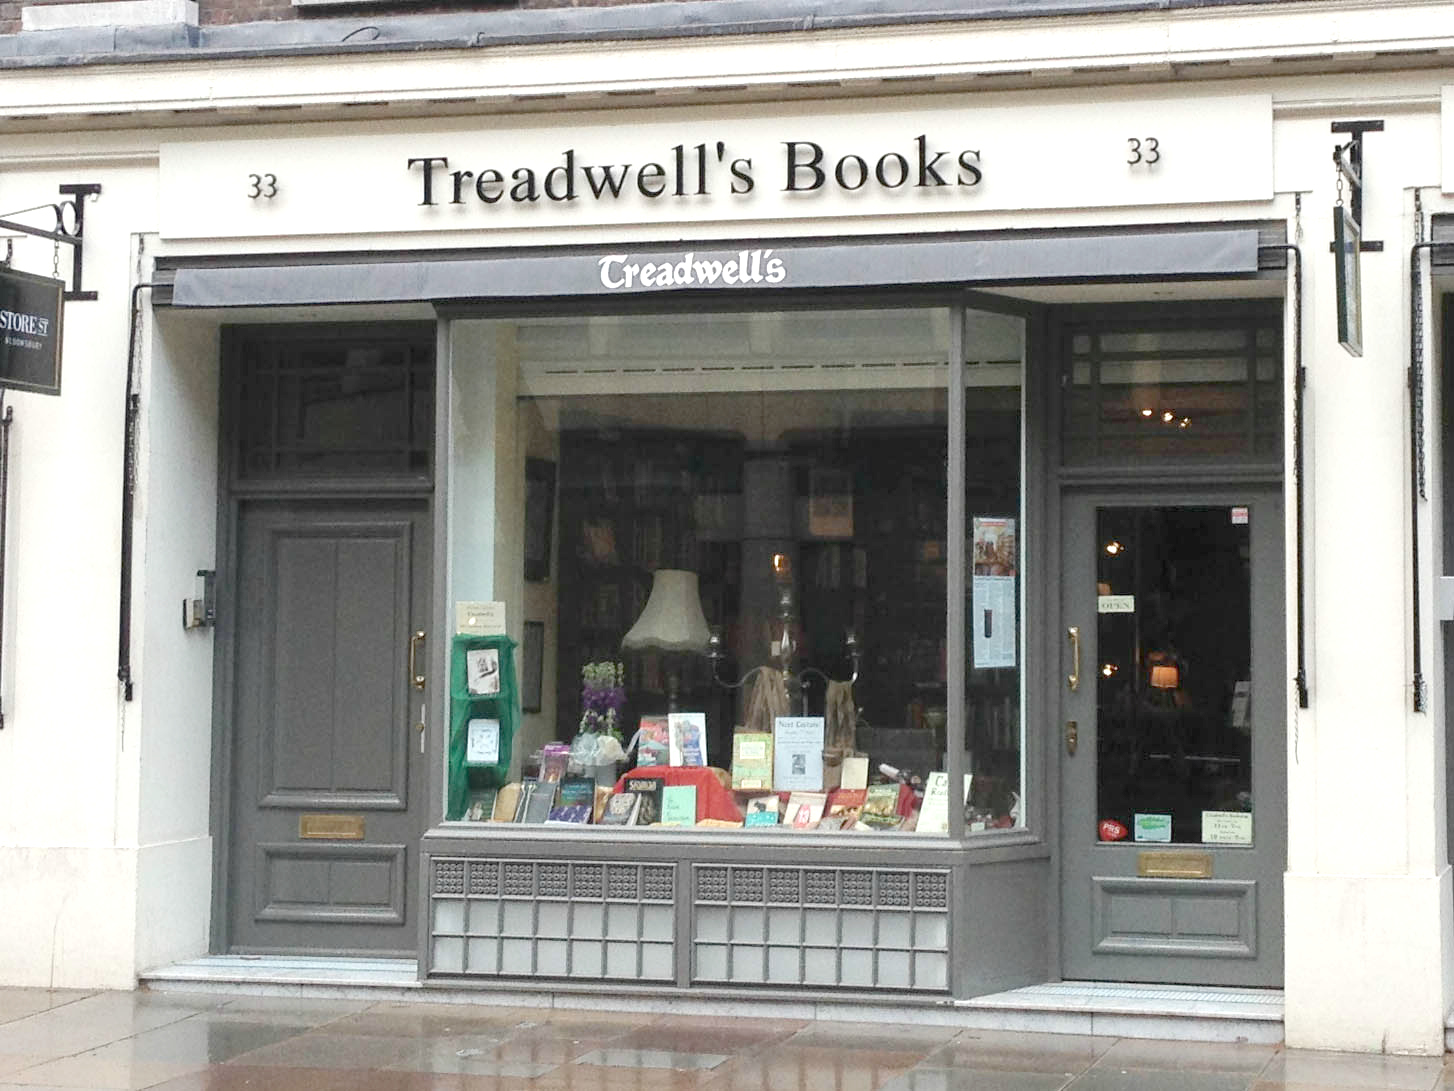 London's spiritual Treadwell's Books store